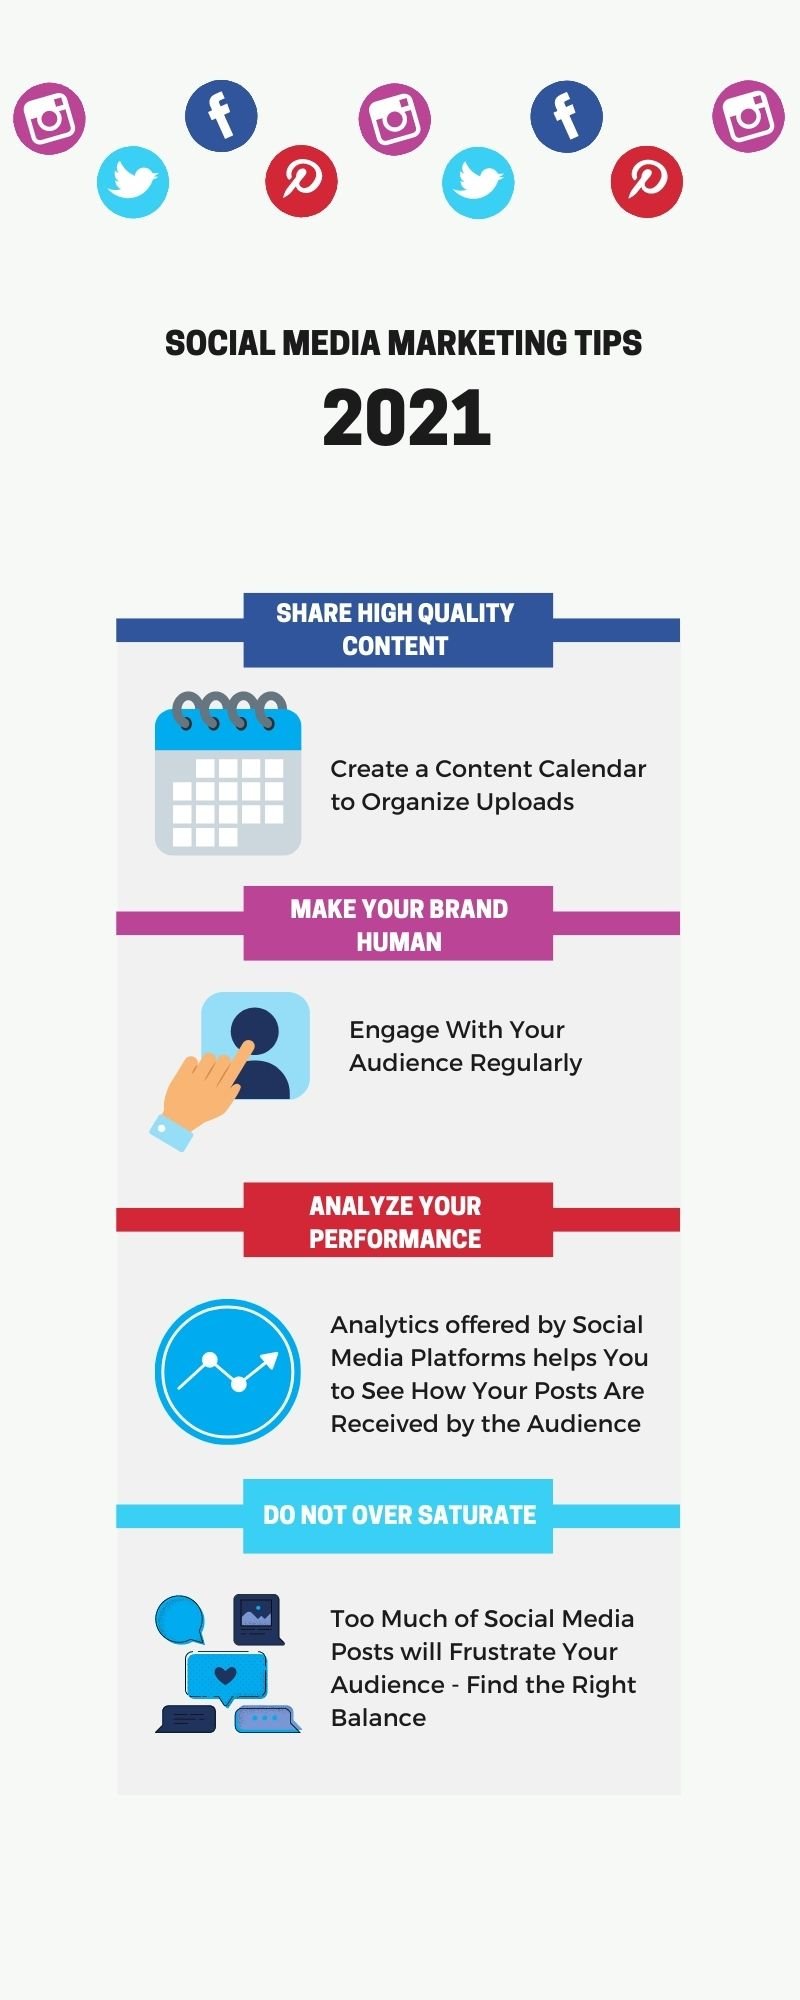 Social Media Marketing Tips for 2021